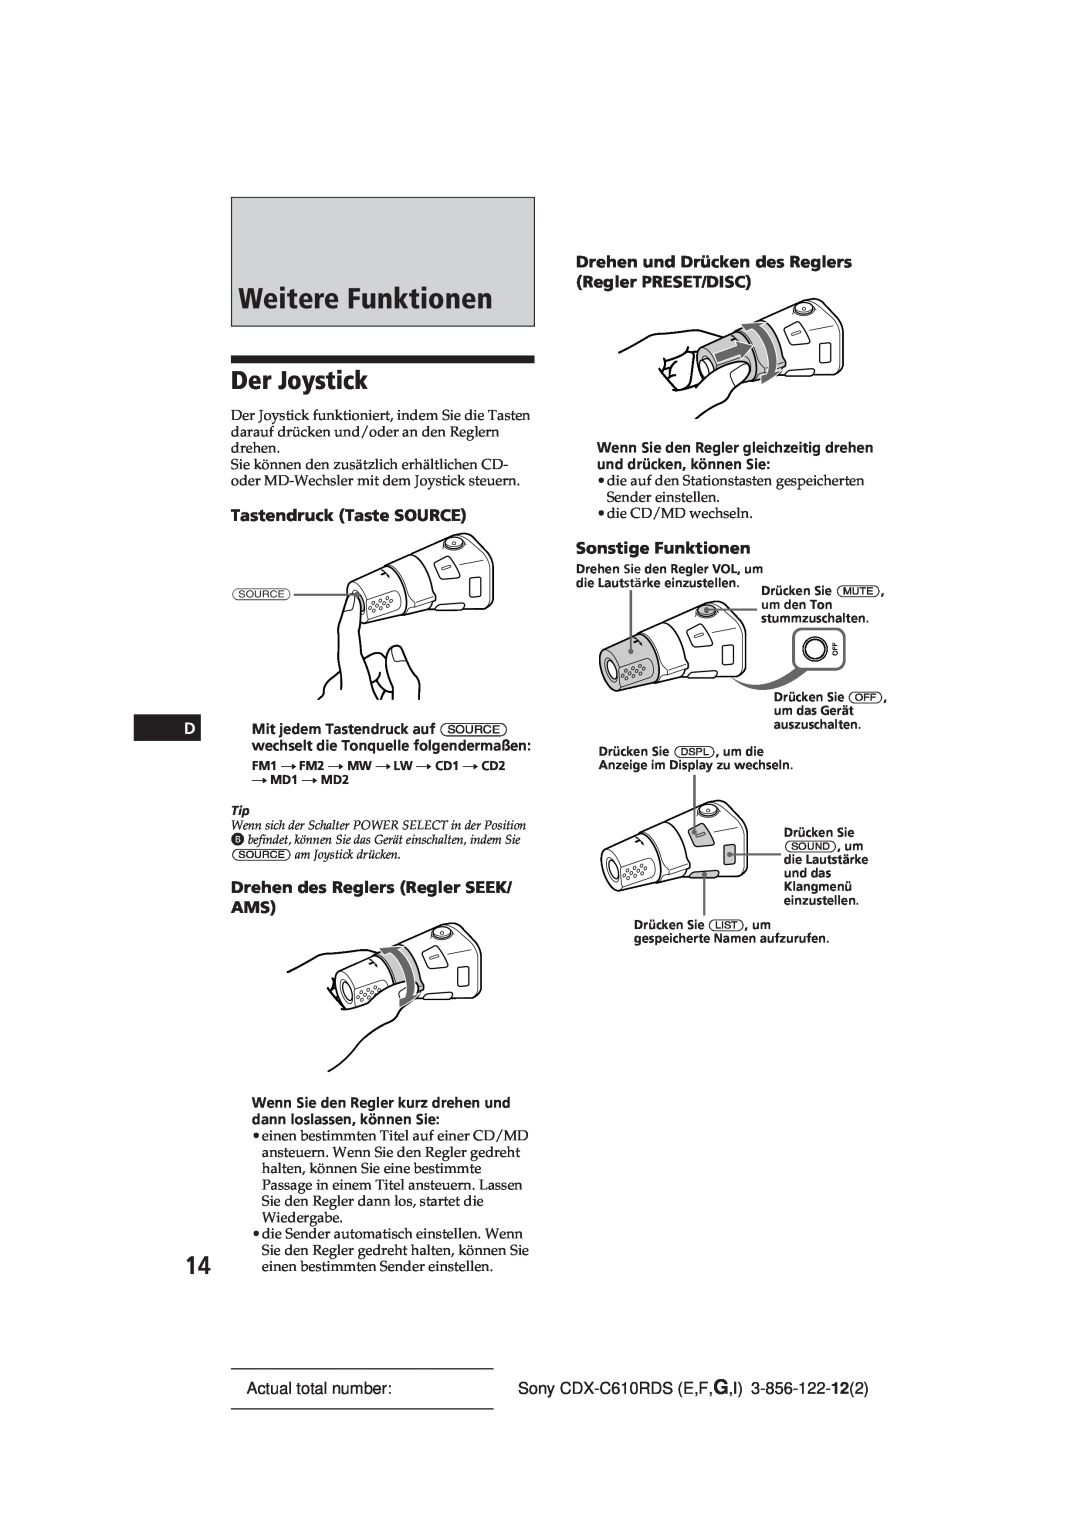 Sony CDX-C610RDS manual Weitere Funktionen, Der Joystick, Tastendruck Taste SOURCE, Drehen des Reglers Regler SEEK/ AMS 